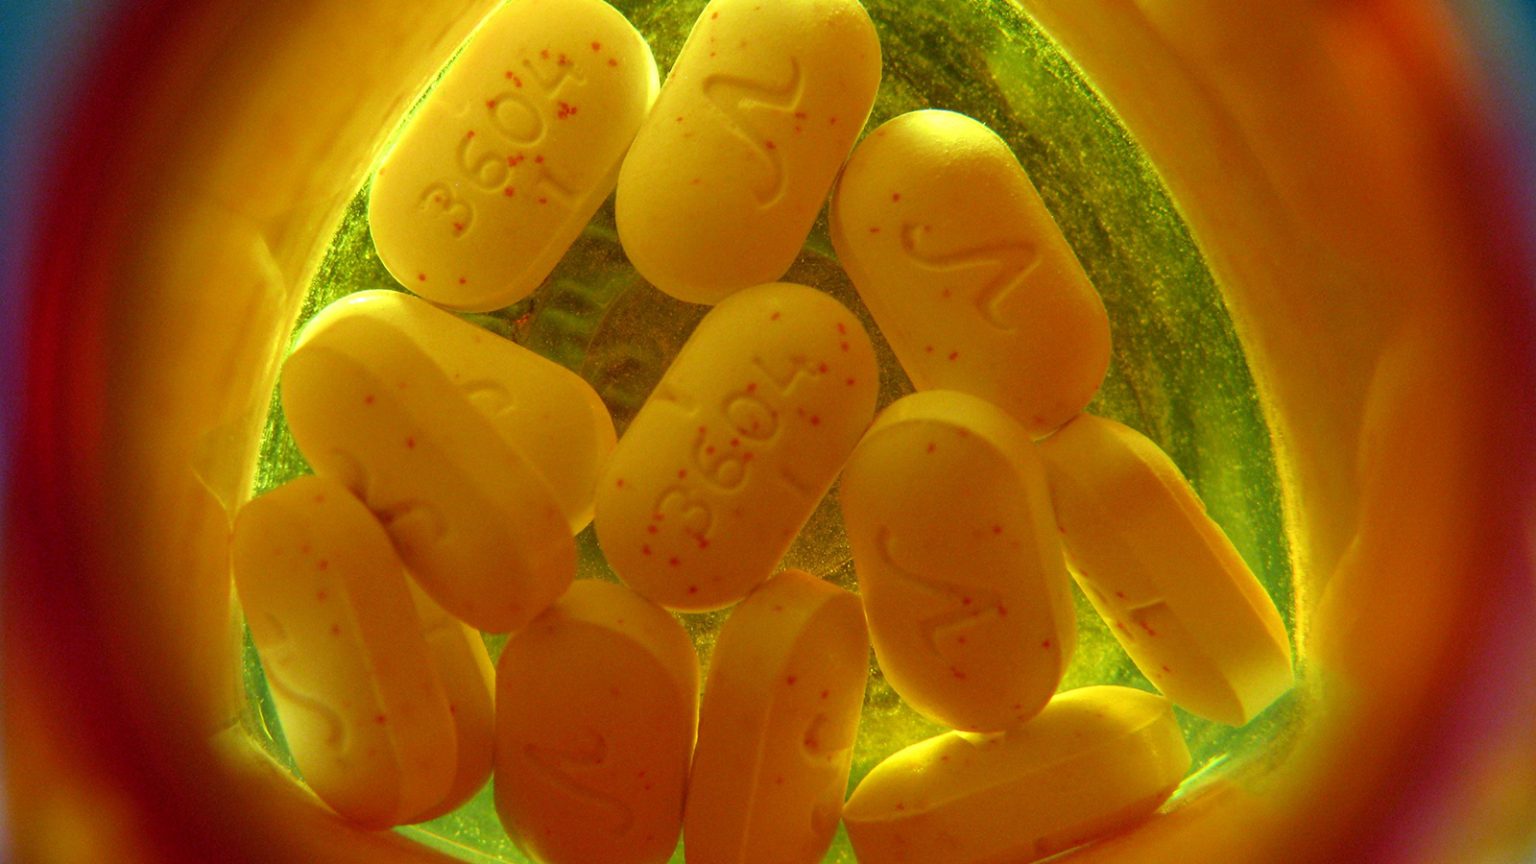 A dozen pills sit at the bottom of an orange prescription medication container.